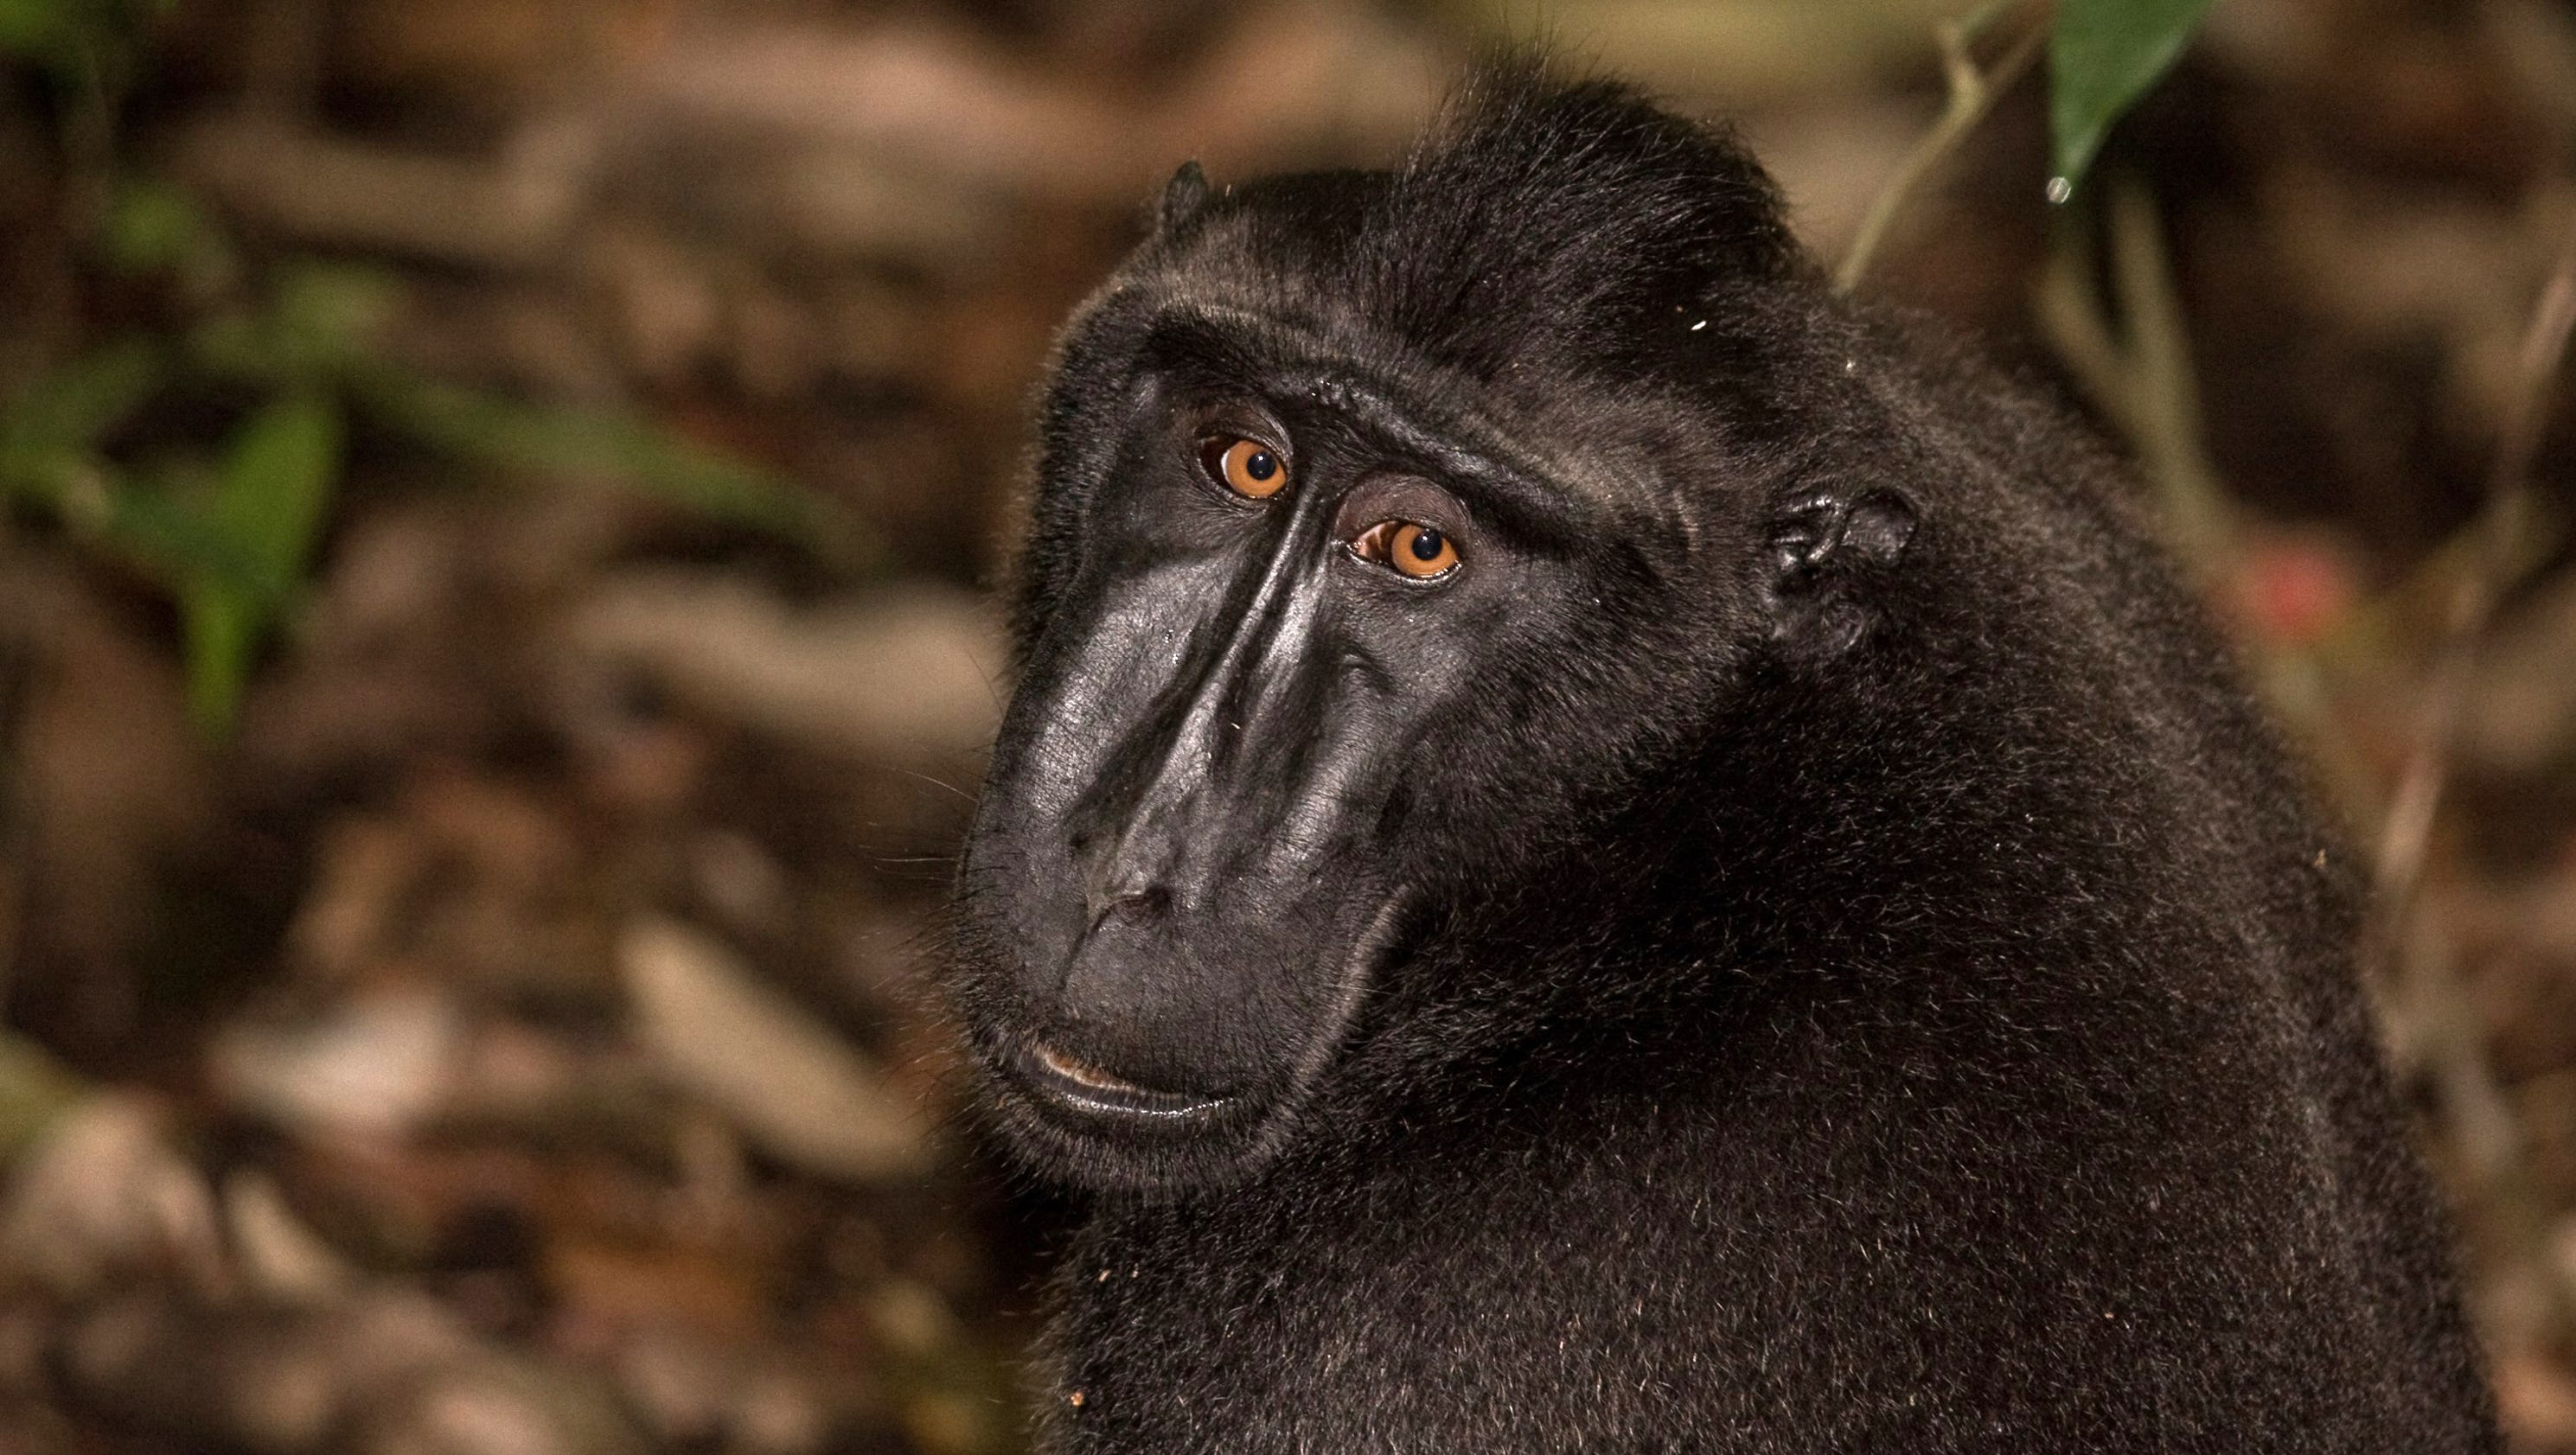 Over half of world’s apes and monkeys in danger of extinction